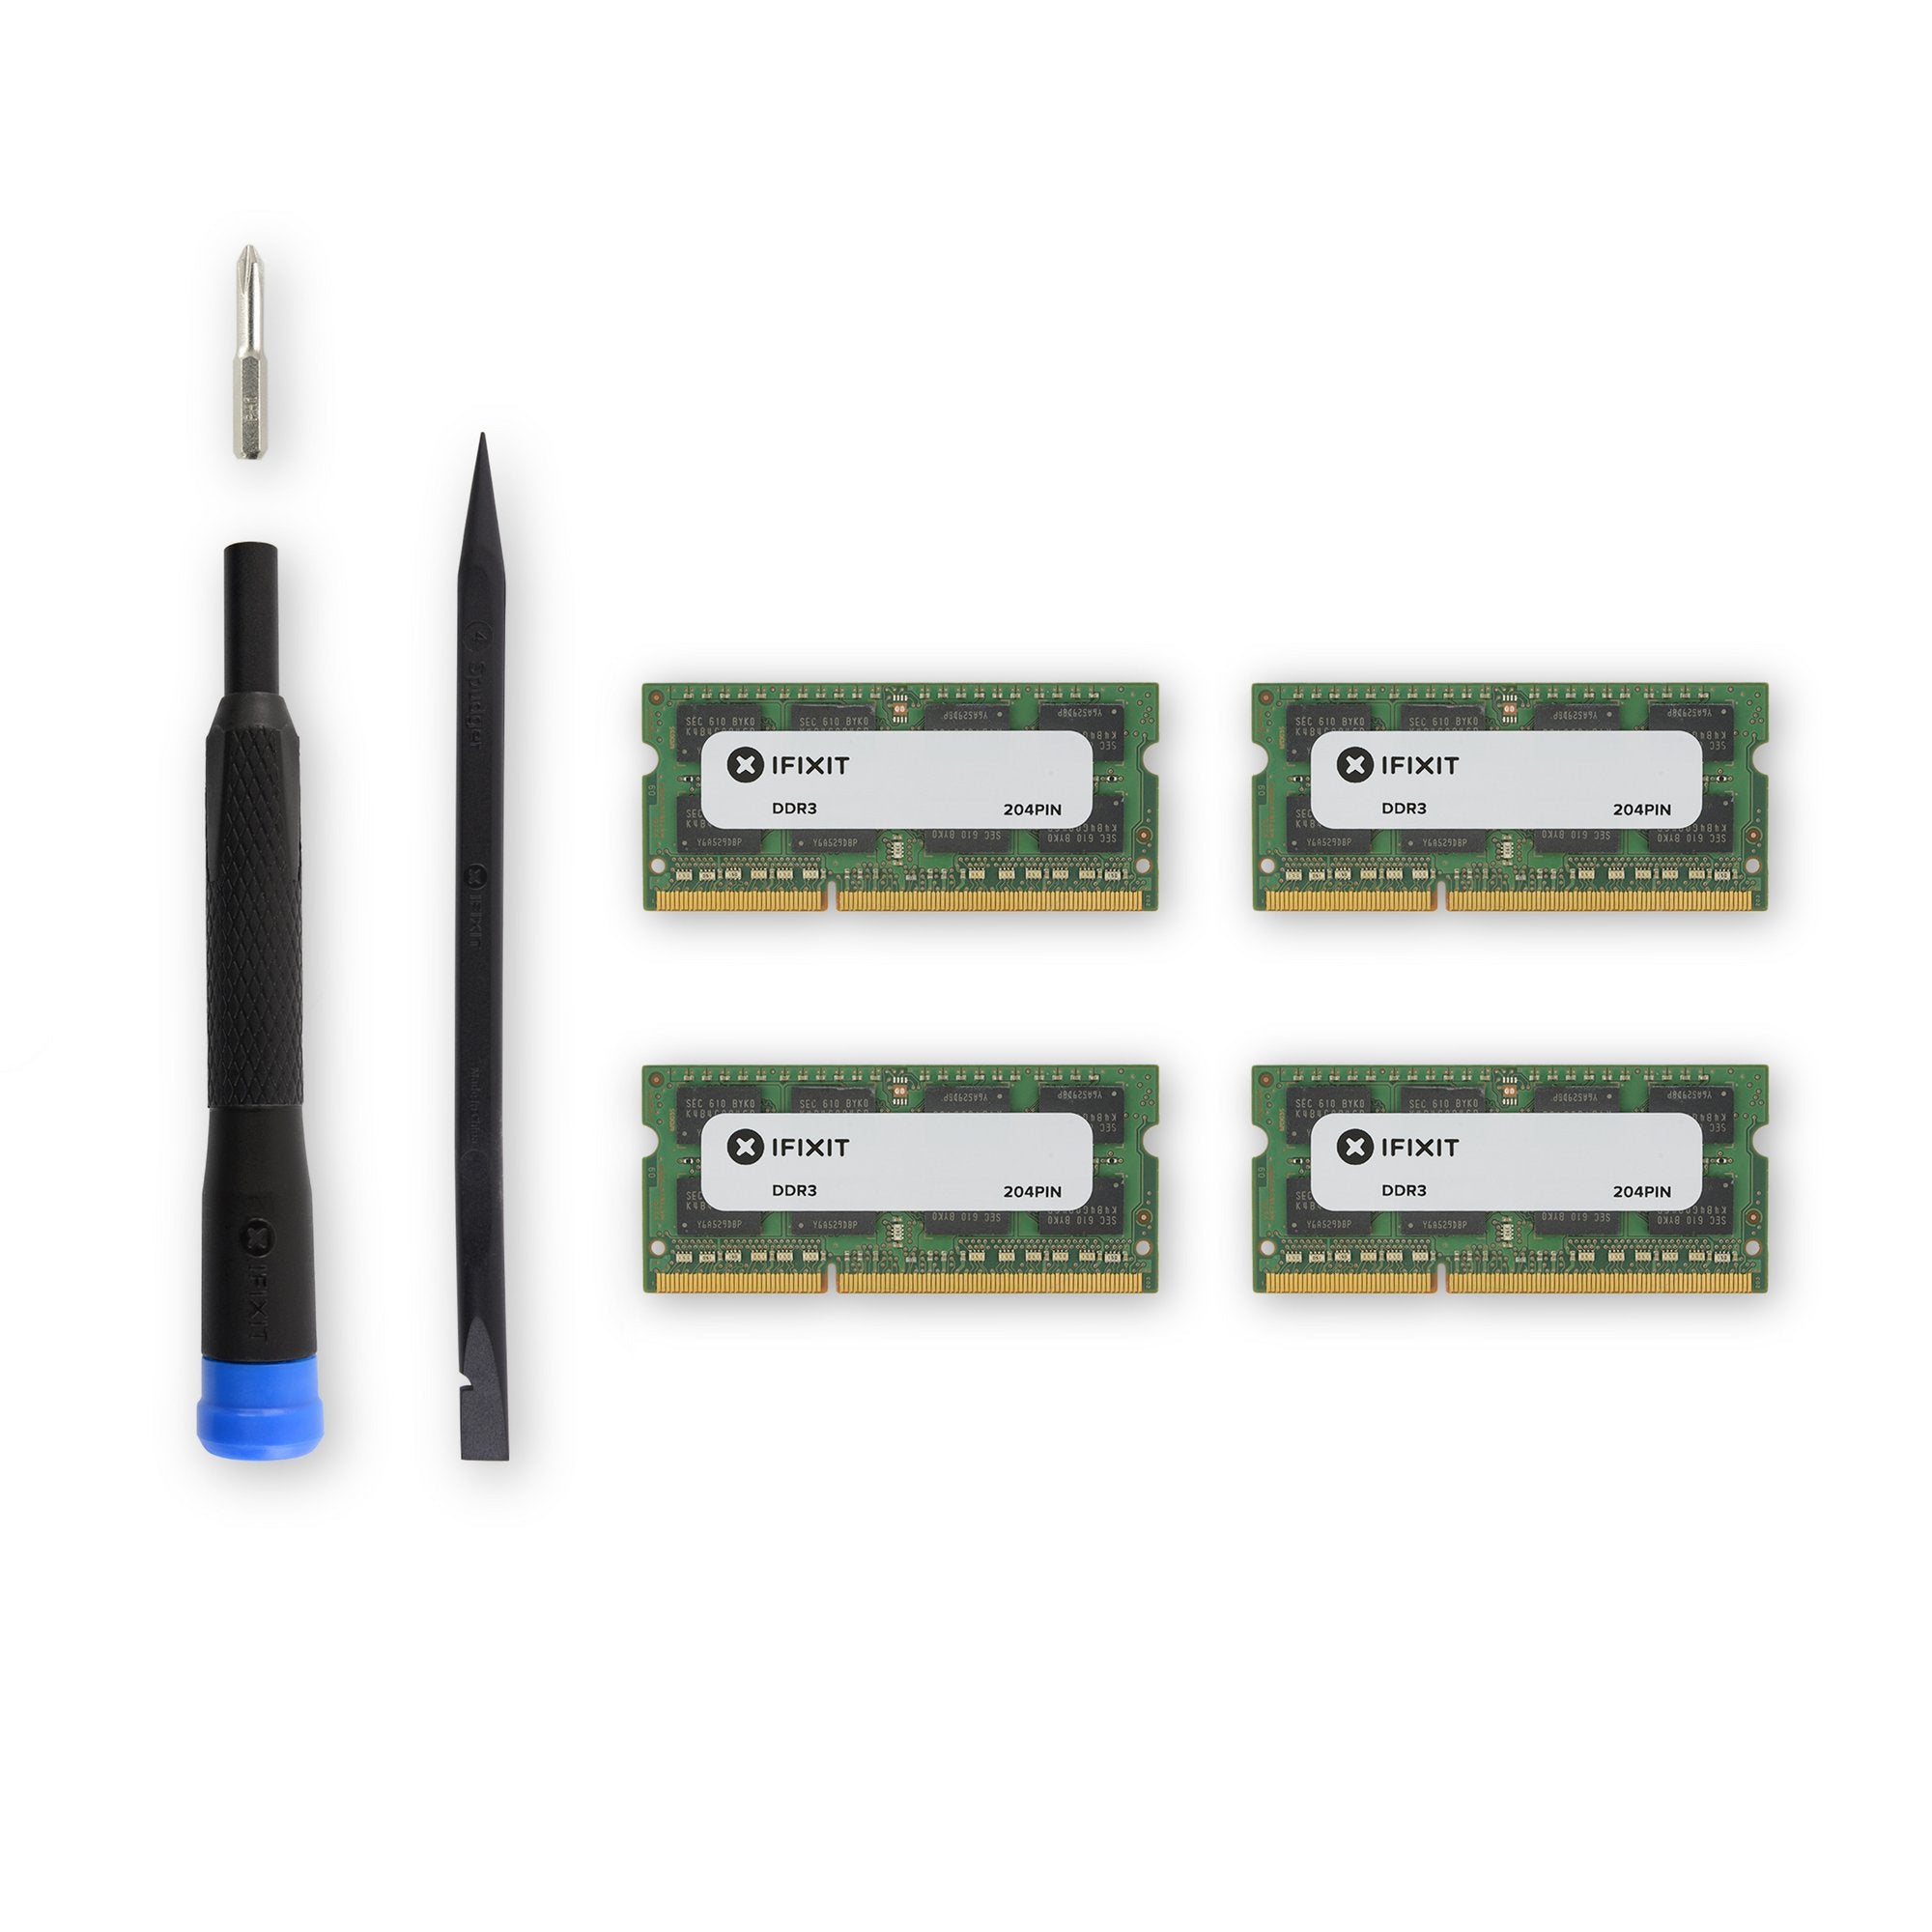 iMac Intel EMC 2374 (Late 2009) Memory Maxxer RAM Upgrade Kit